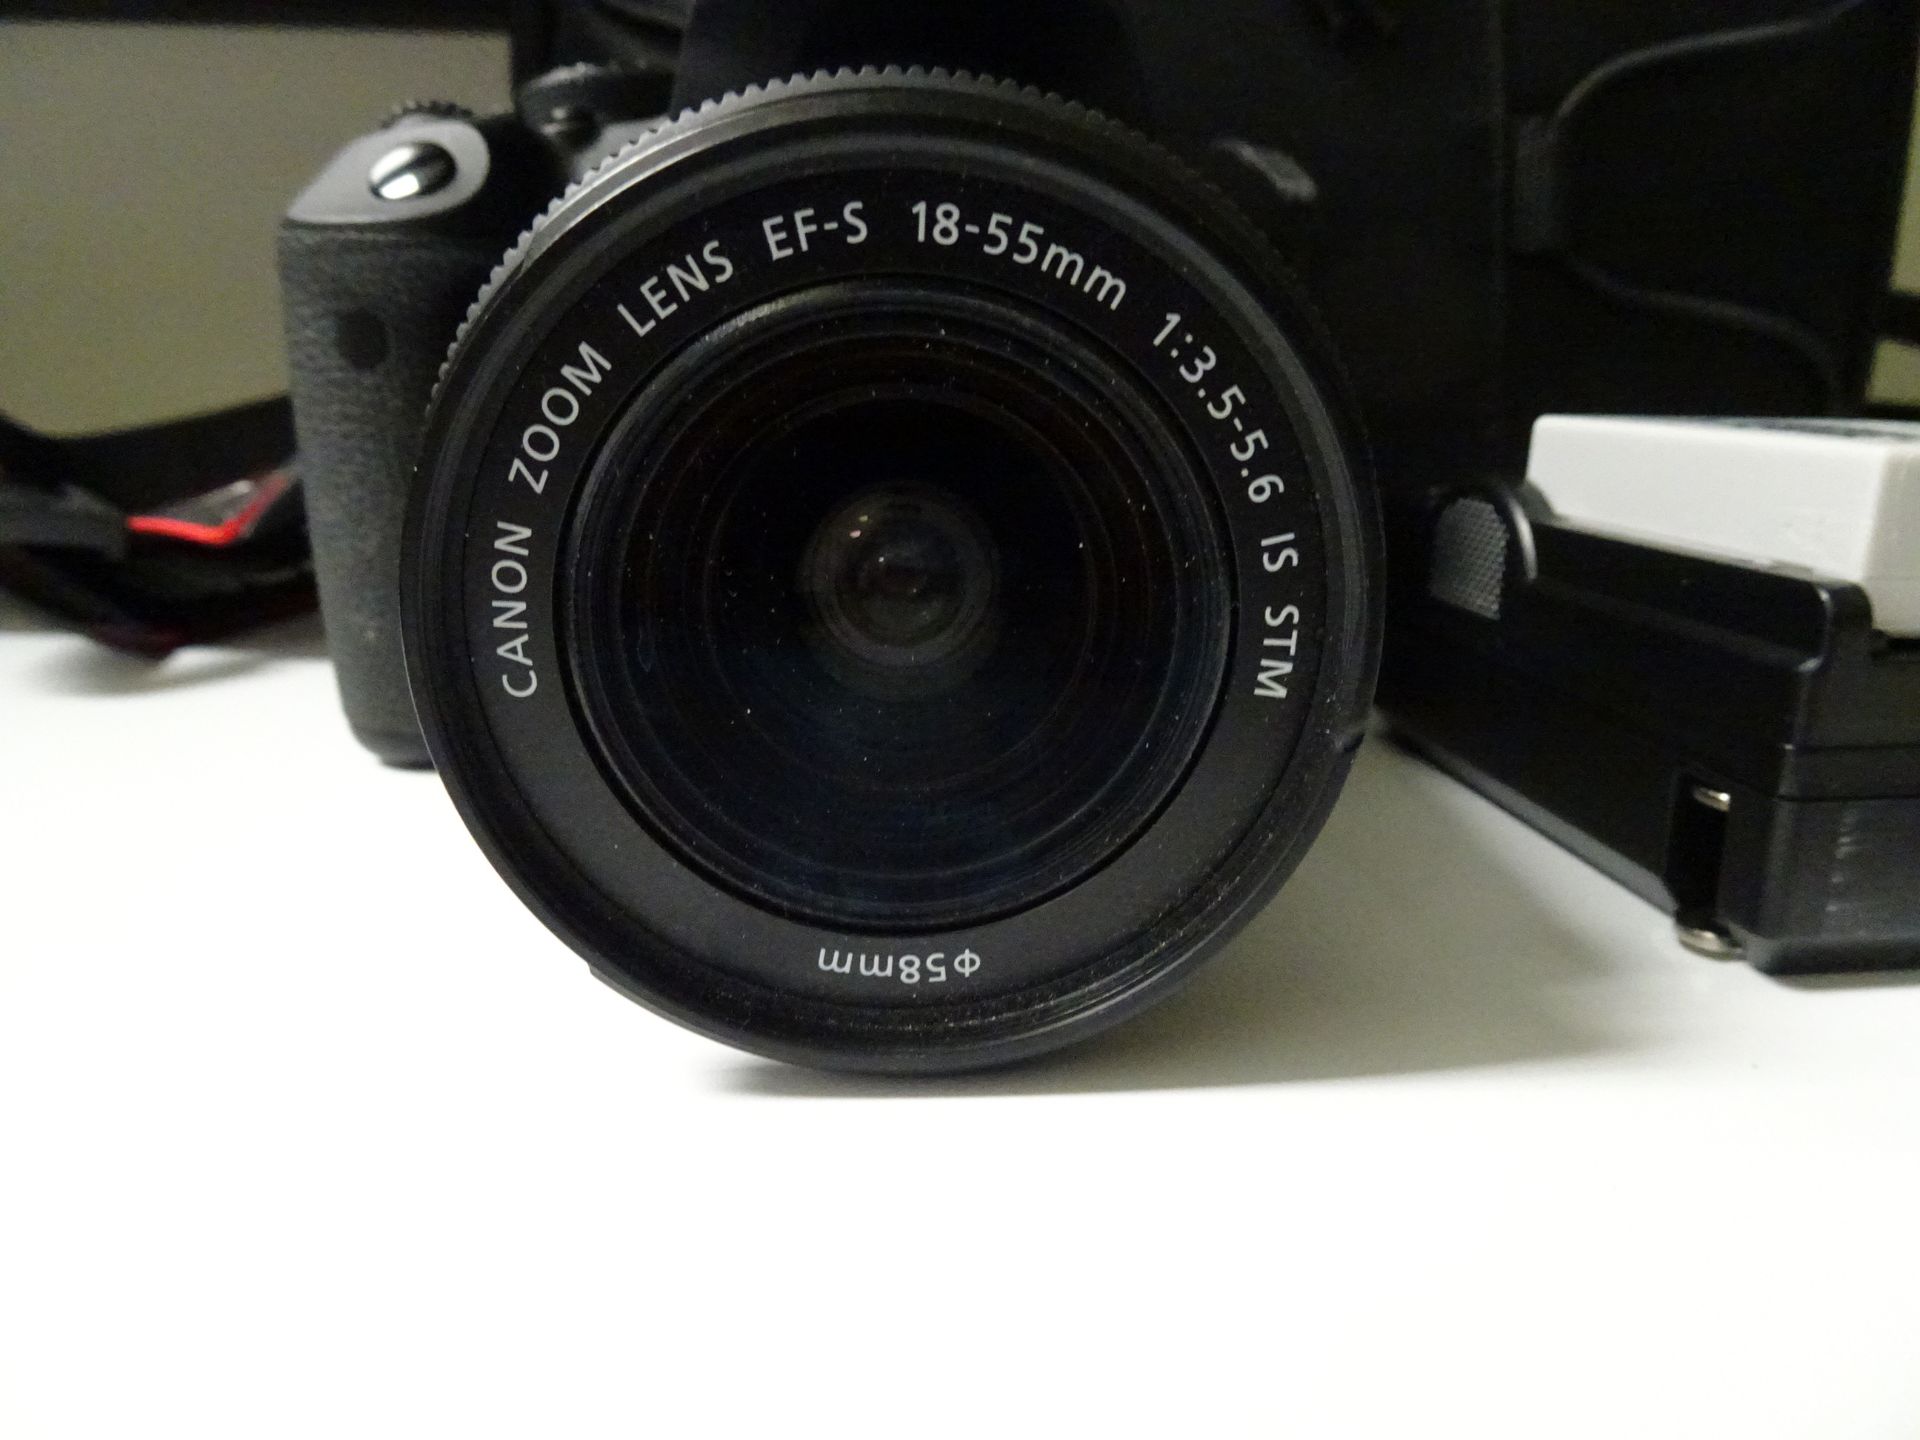 Canon EOS Rebel T5i DSLR sn 302075003371 w/ Canon EF-S 18-55mm 1:3.5-5.6 IS STM /58mm Lens, (2) - Image 5 of 15